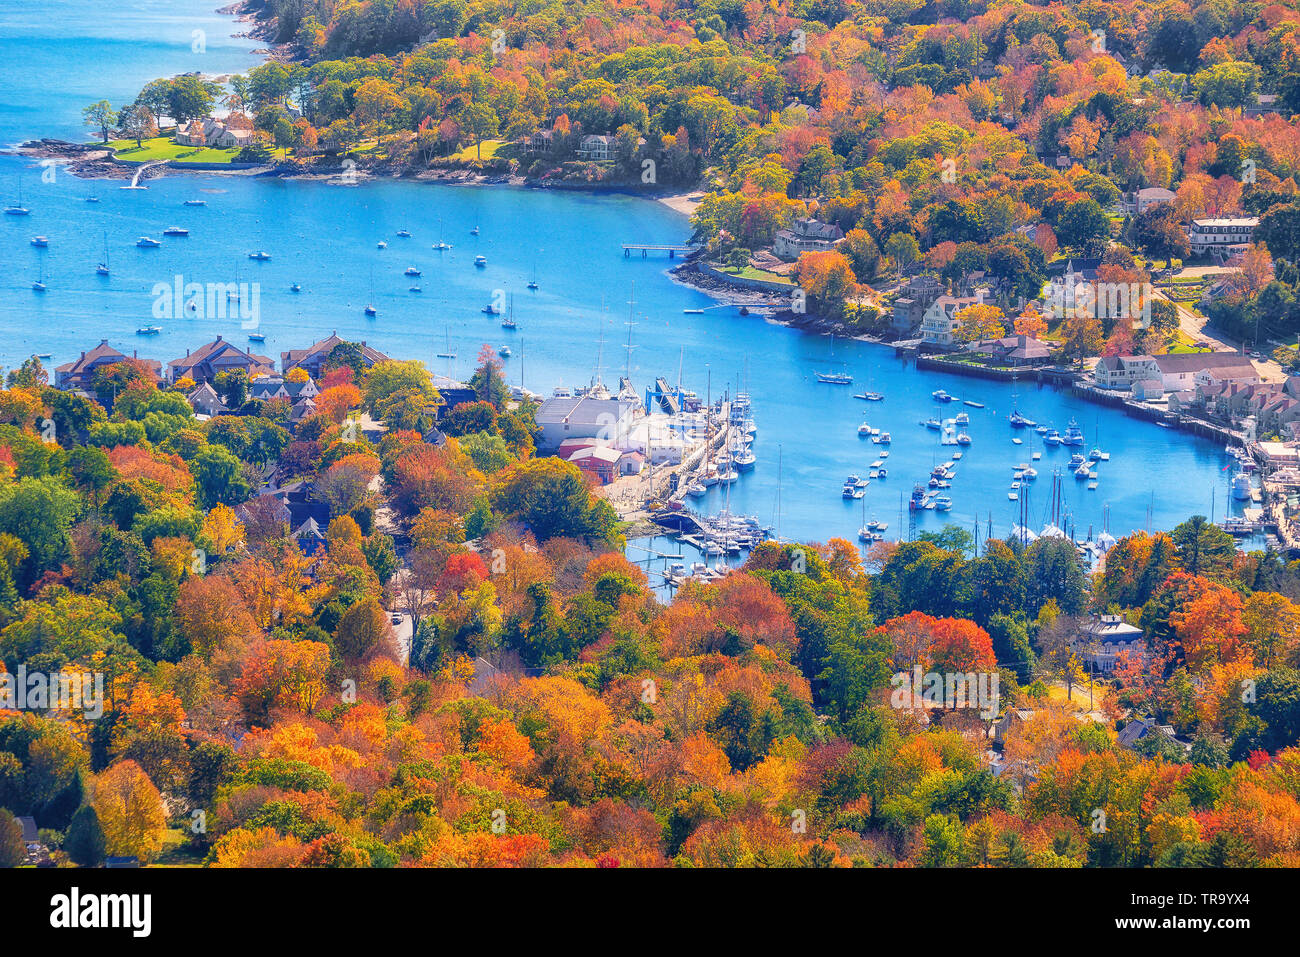 View from Mount Battie overlooking Camden harbor, Maine. Beautiful autumn foliage colors in October. Stock Photo